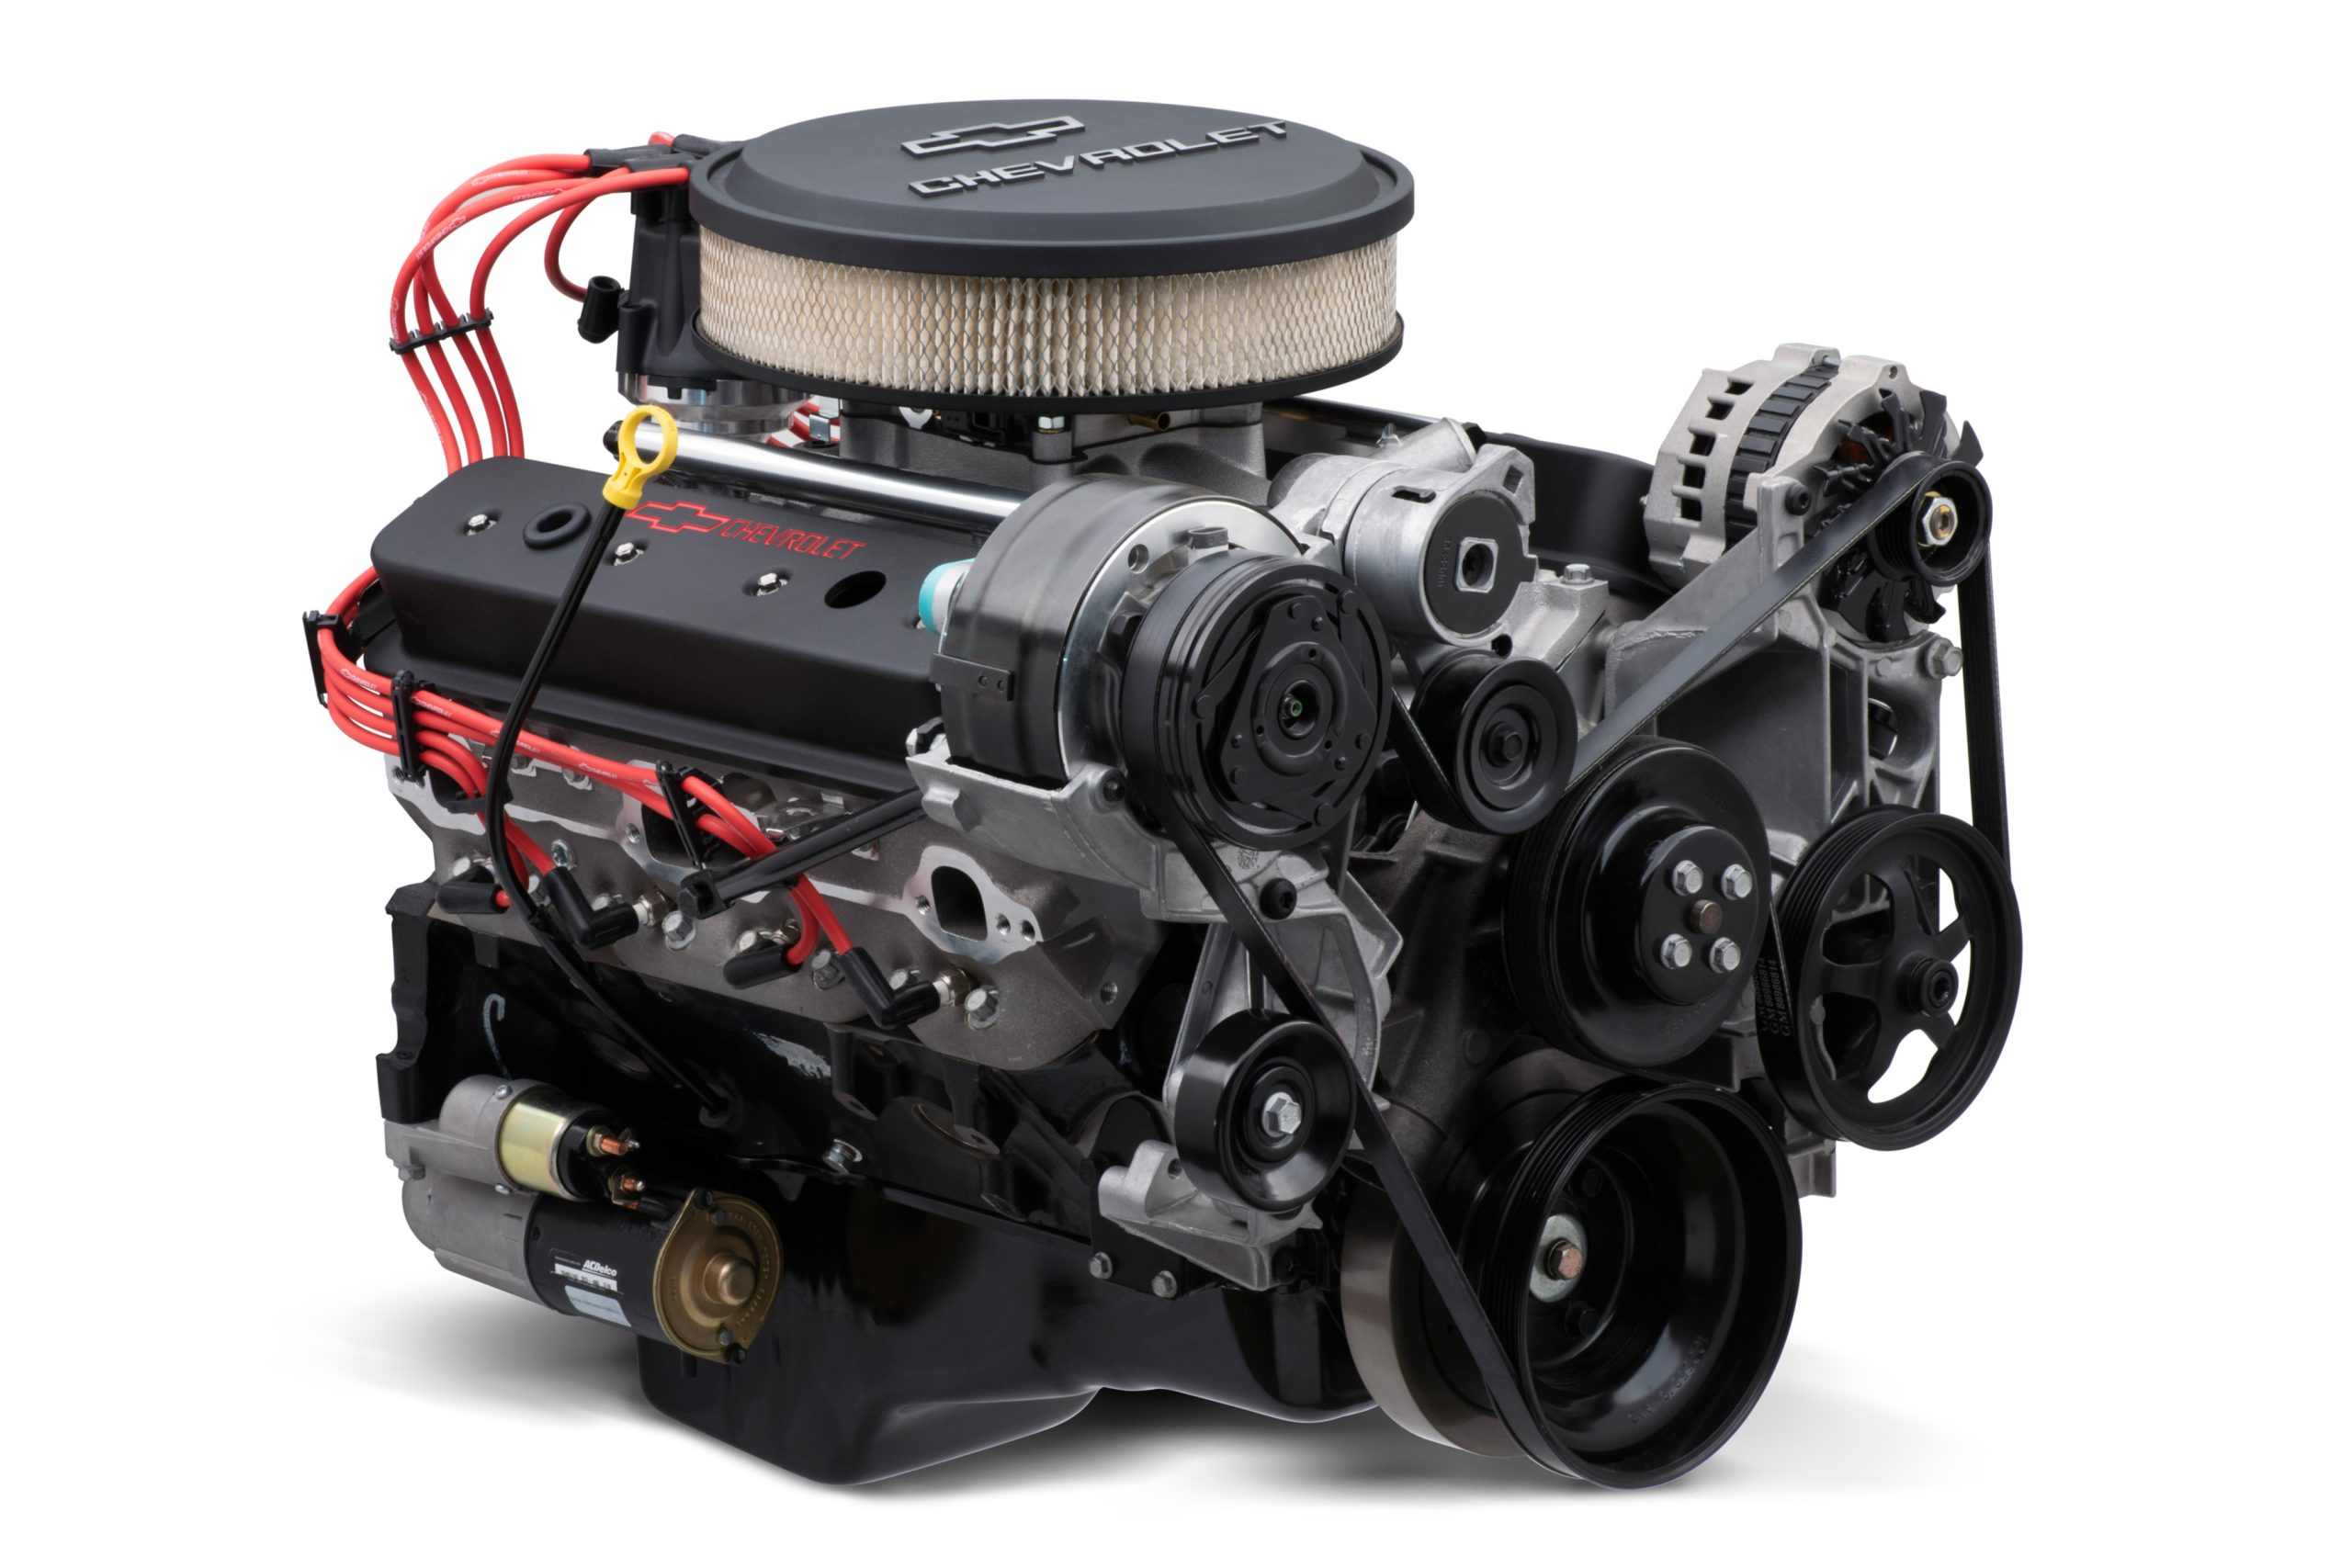 Small-block Chevy V8 engine